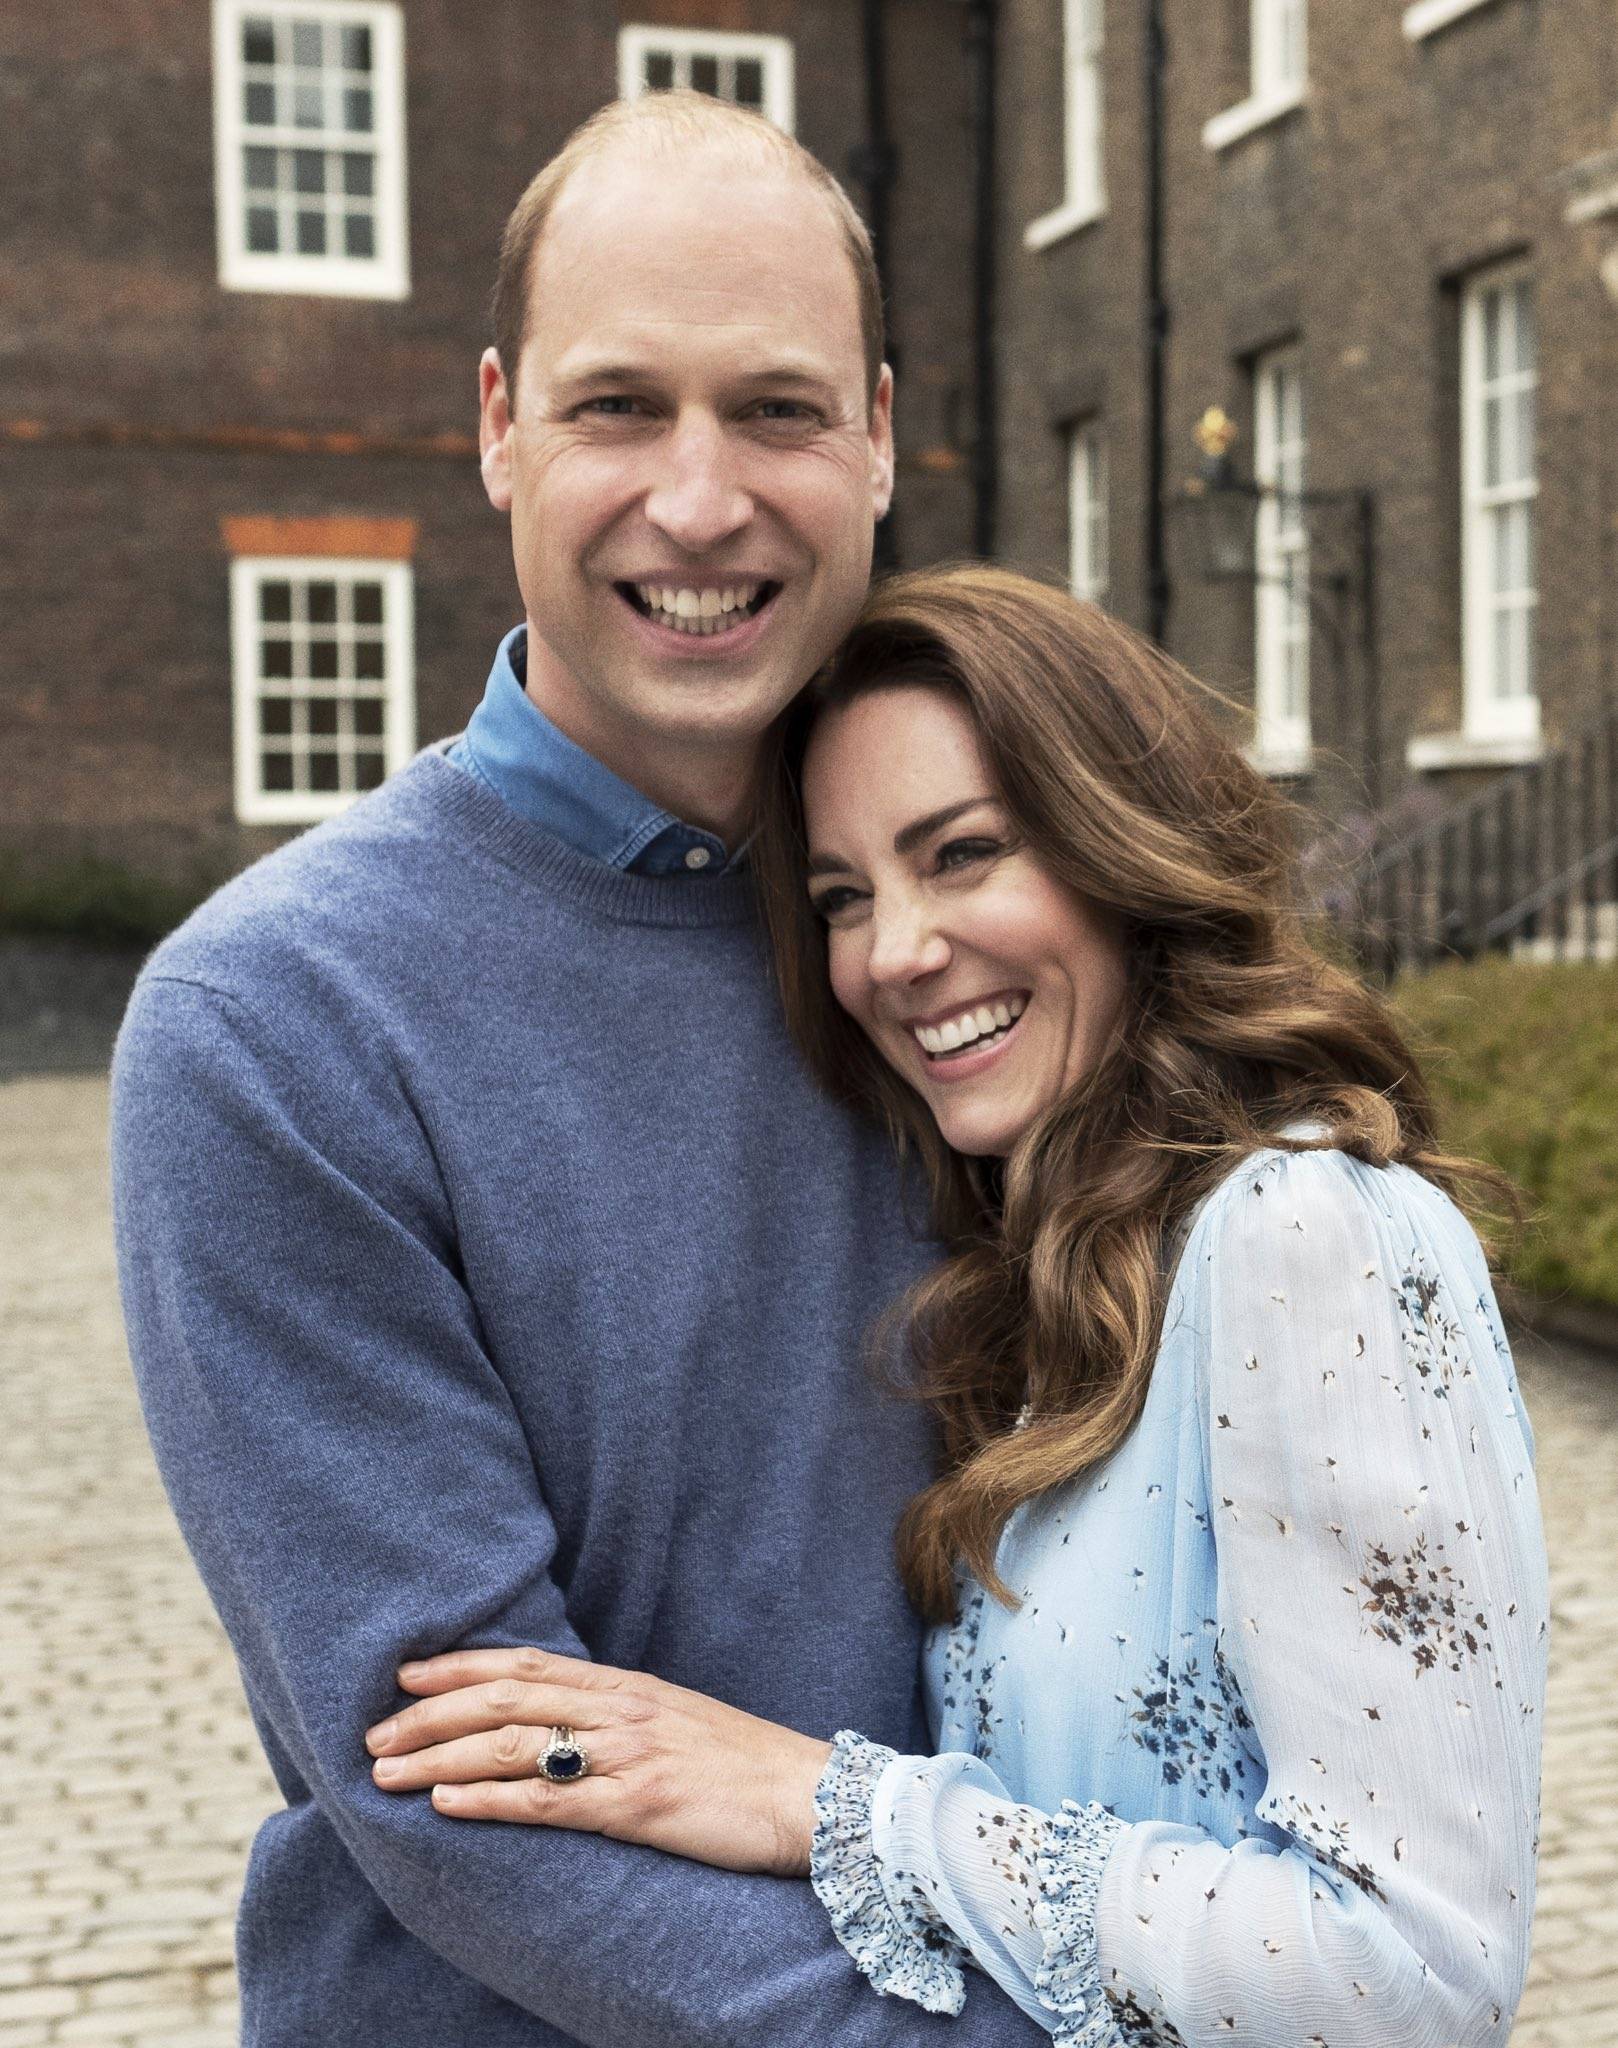 HQ Images 4 U: Prince William and Catherine Middleton Wedding on 29 ...